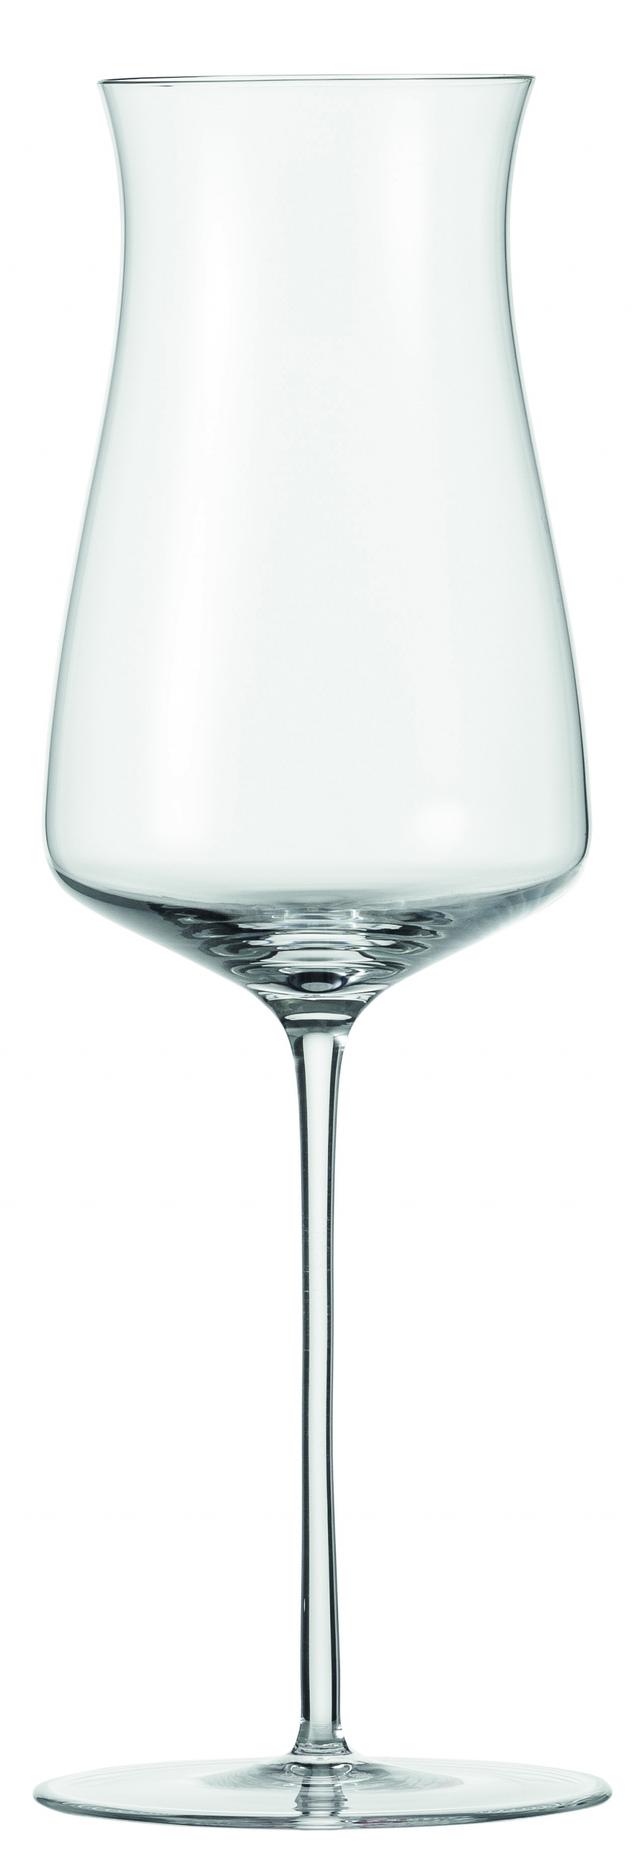 zwiesel glas the moment rosé champagneglas met mp 773 - 0.374ltr - geschenkverpakking 2 glazen